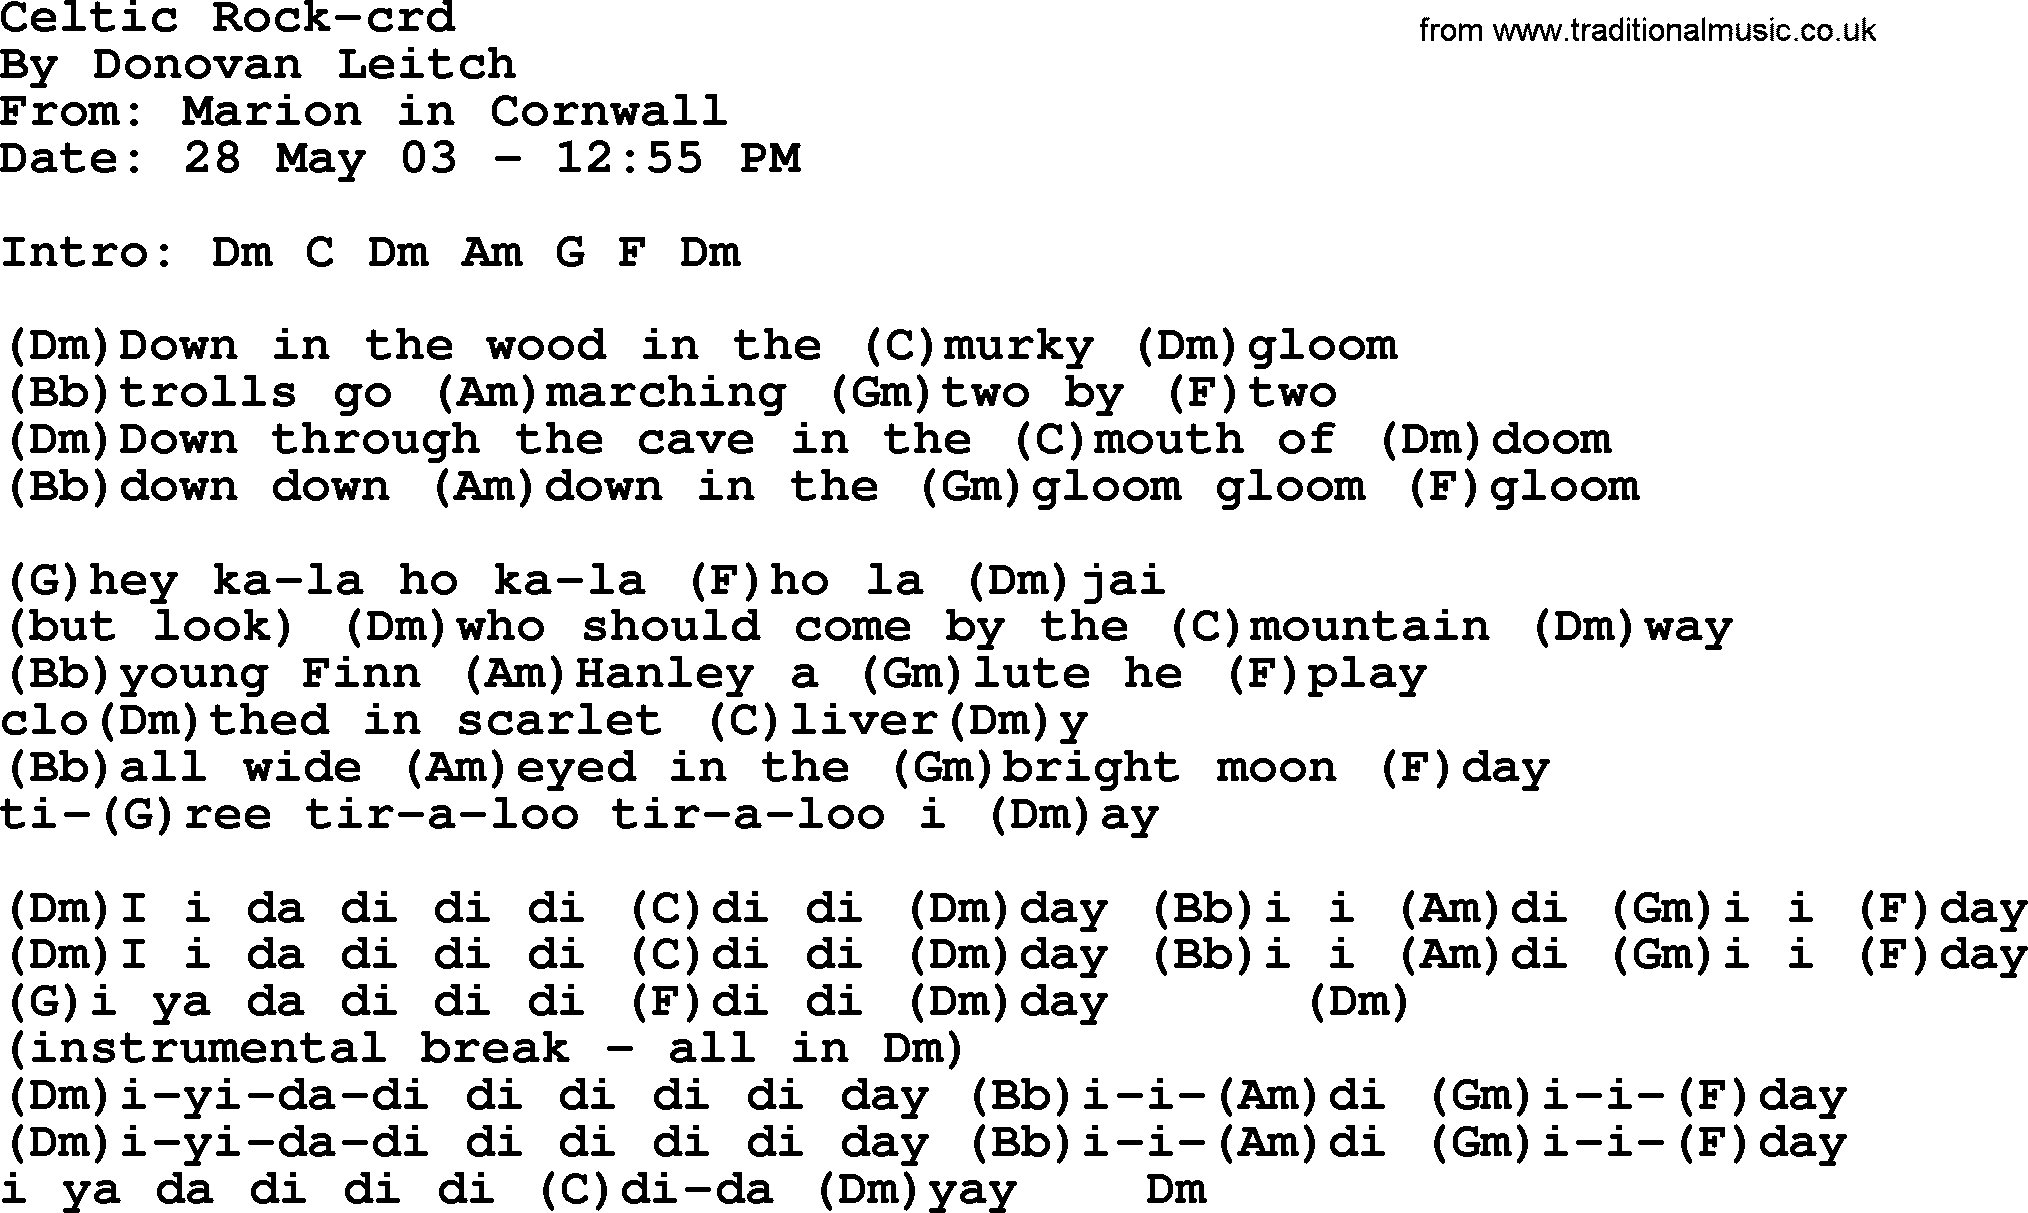 Donovan Leitch song: Celtic Rock lyrics and chords